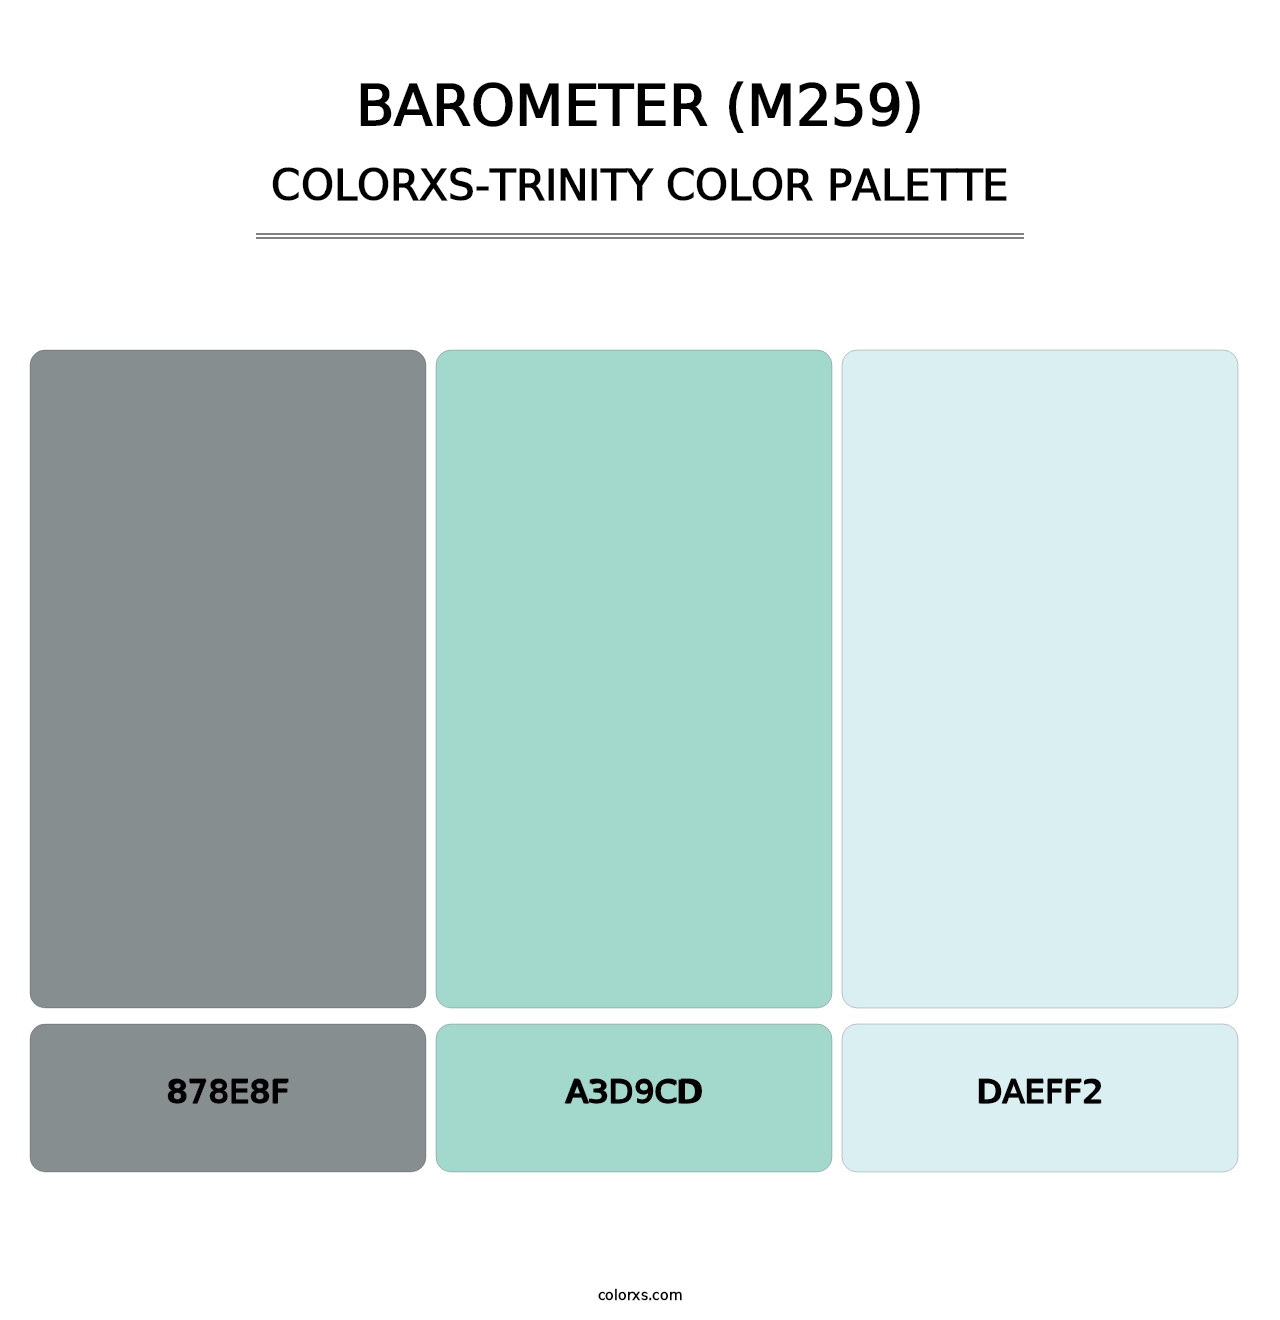 Barometer (M259) - Colorxs Trinity Palette